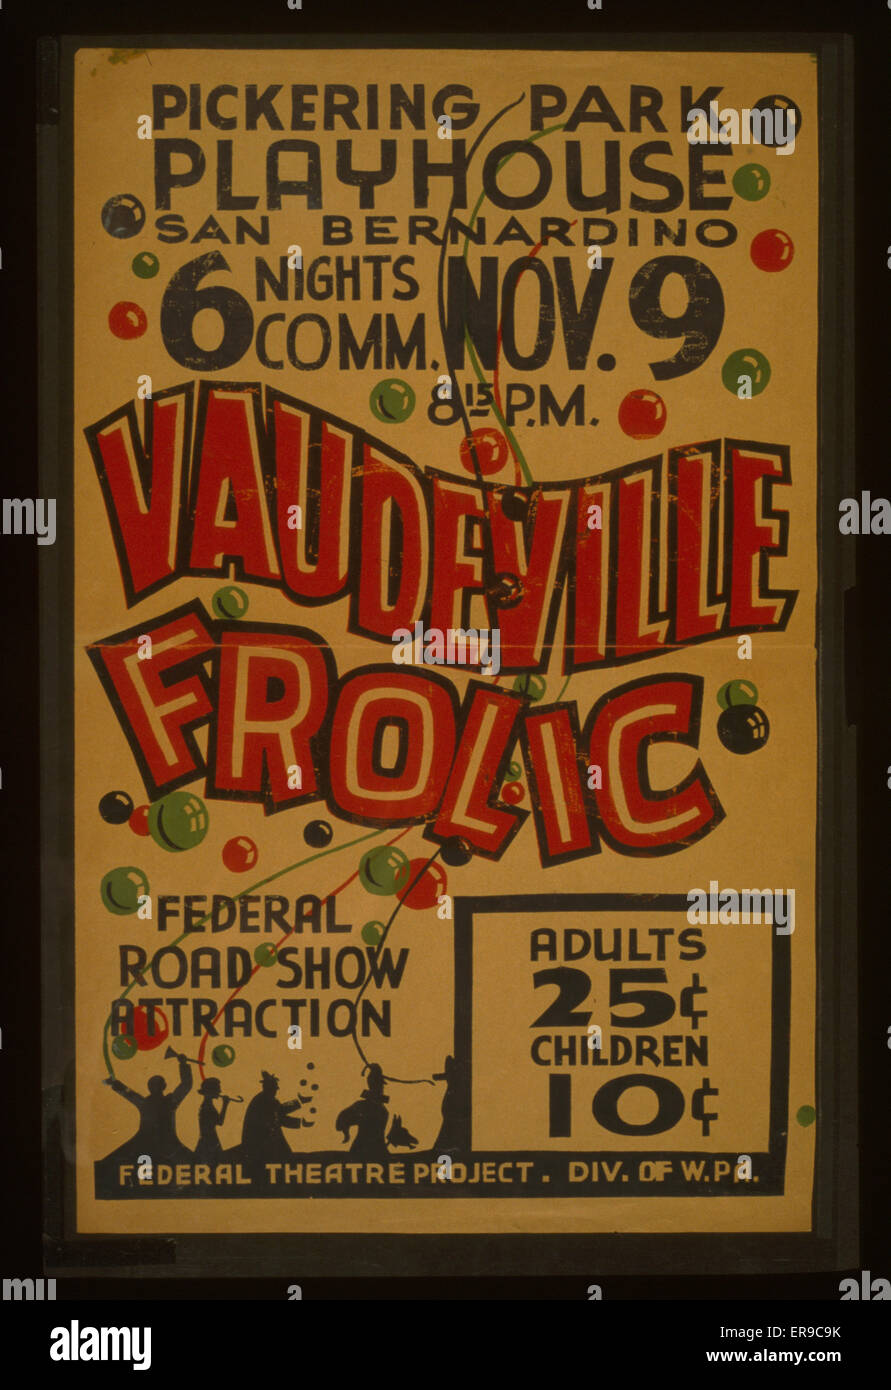 Vaudeville frolic',San Diego,California,Savoy Theater,Orchestra,New Years Eve 